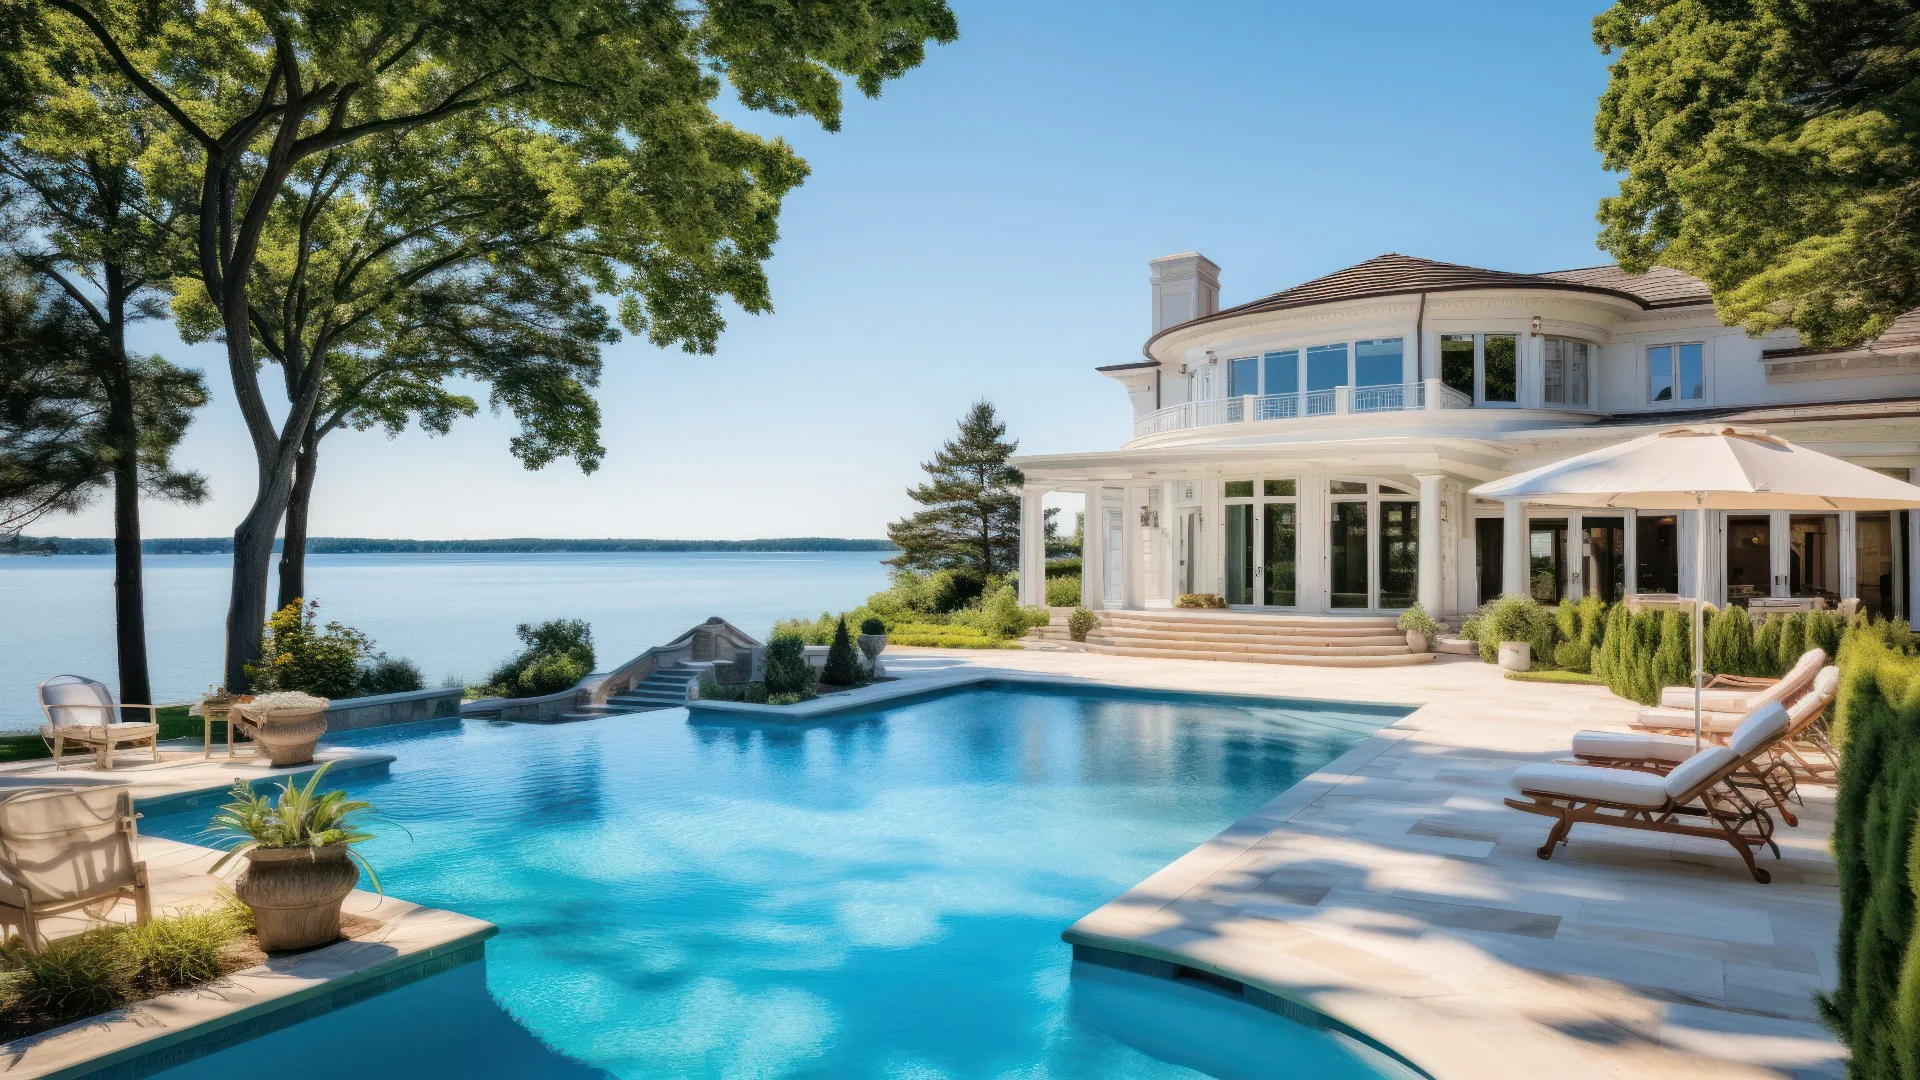 Luxury home in Bridgehampton, NY with an infinity pool.